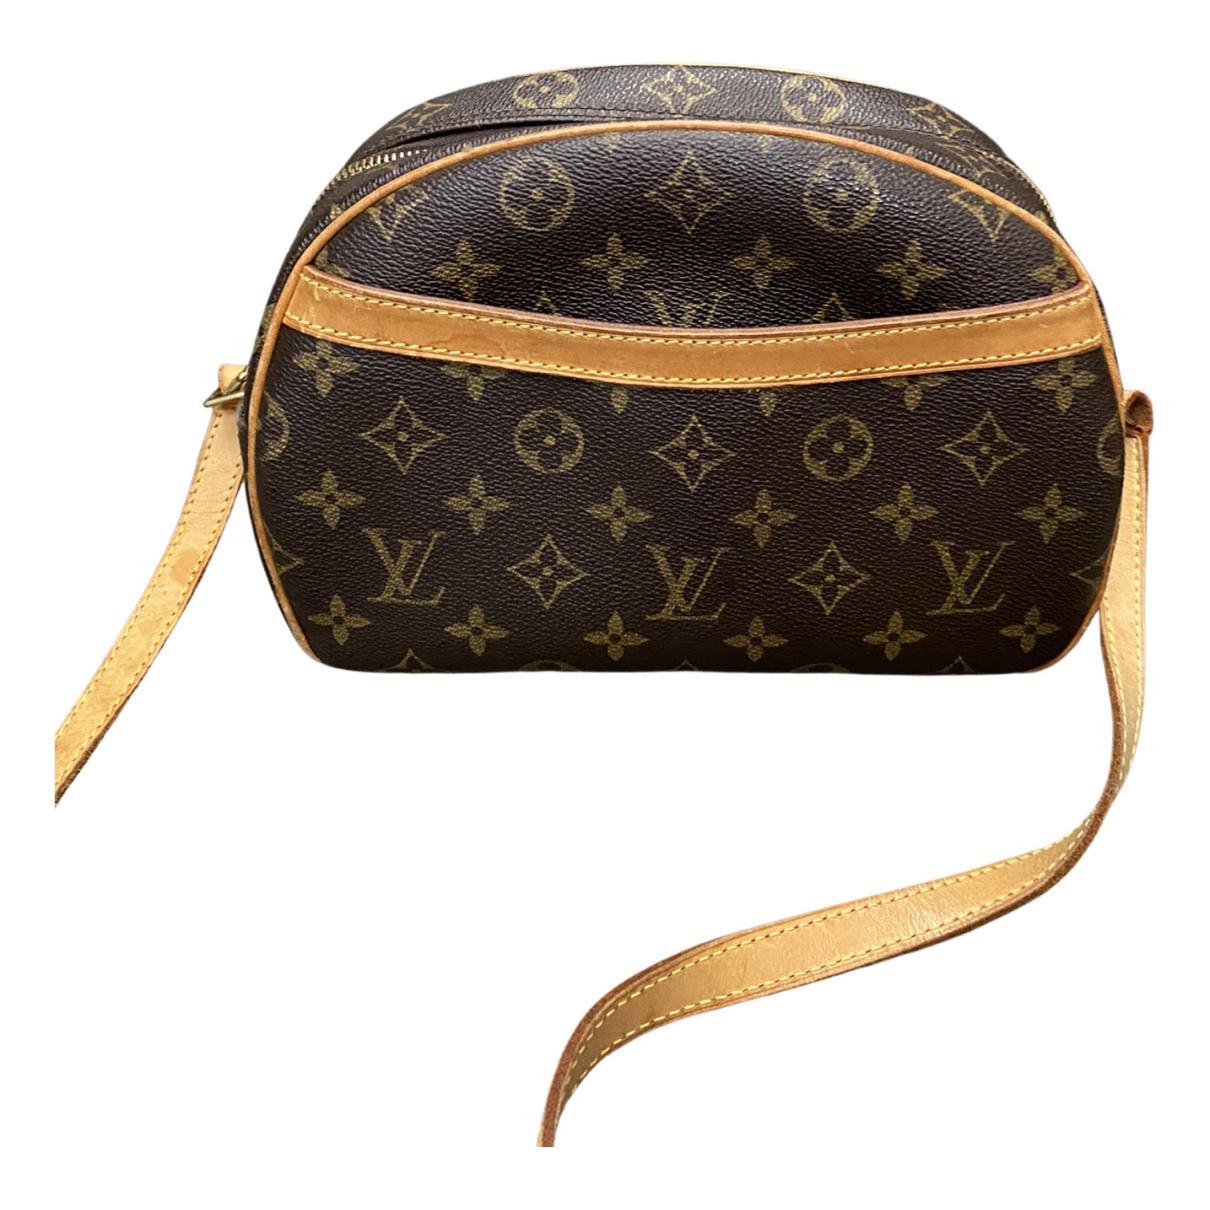 Blois leather crossbody bag